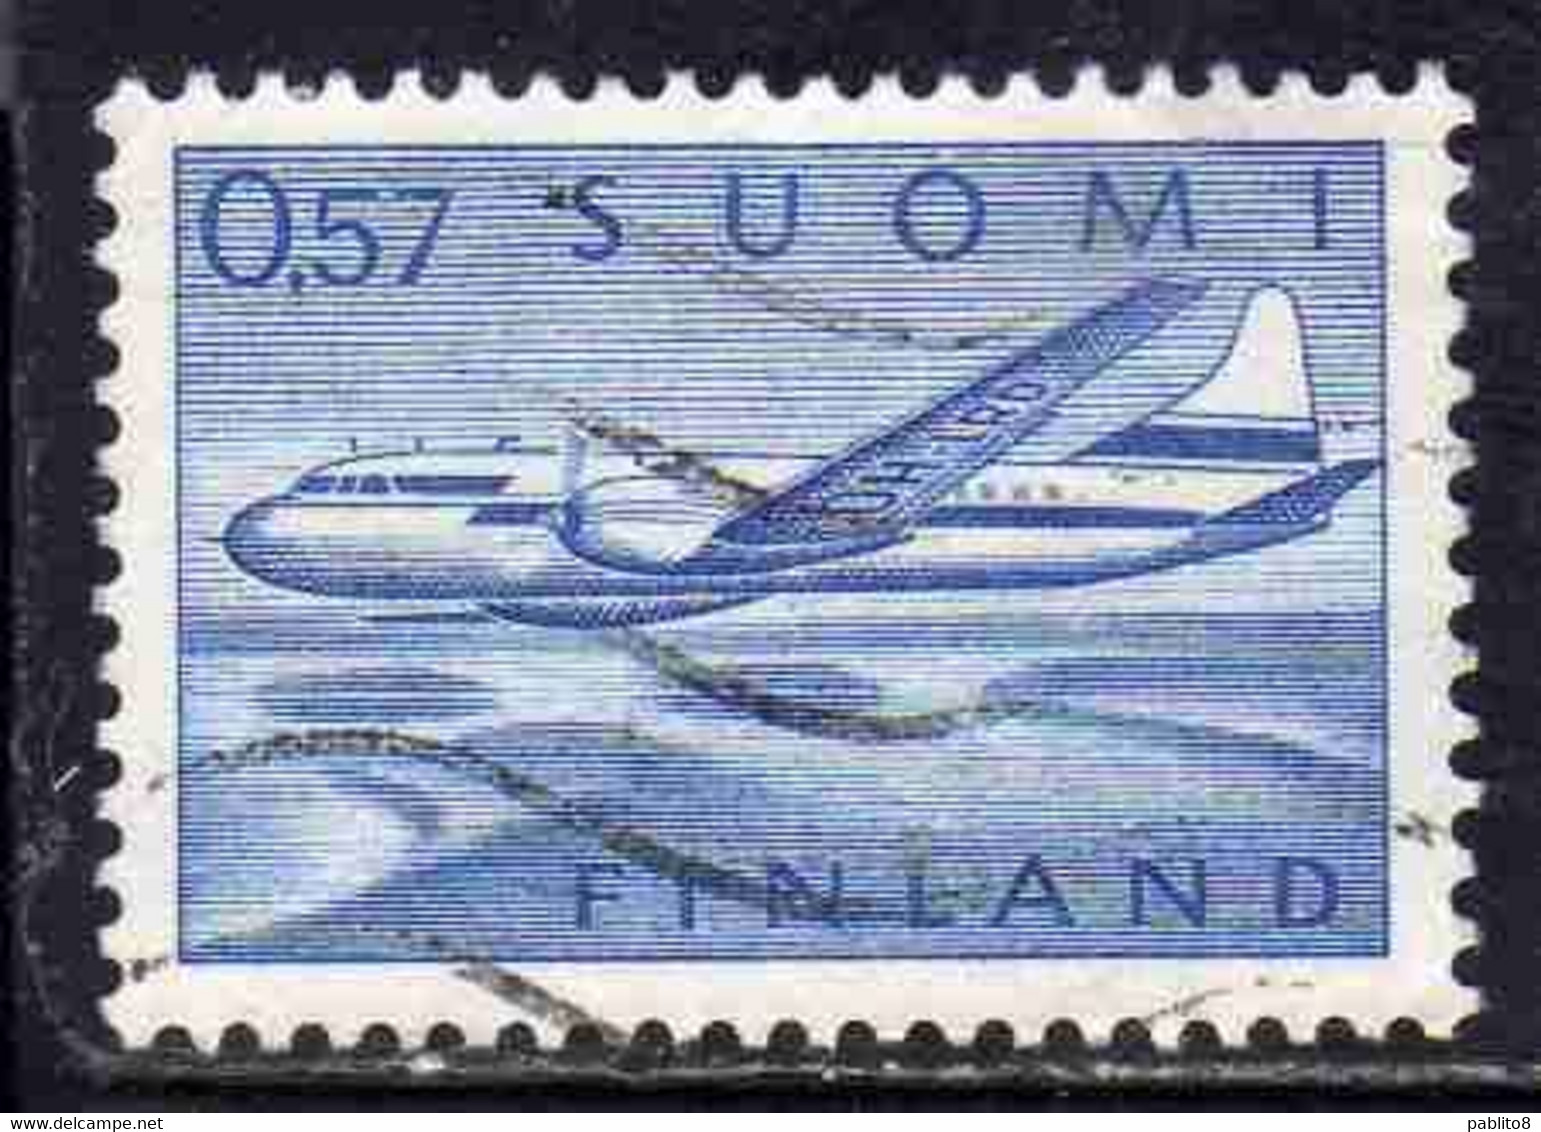 SUOMI FINLAND FINLANDIA FINLANDE 1970 AIR POST MAIL AIRMAIL CONVAIR OVER LAKES 0.57m 57p USED USATO OBLITERE' - Oblitérés